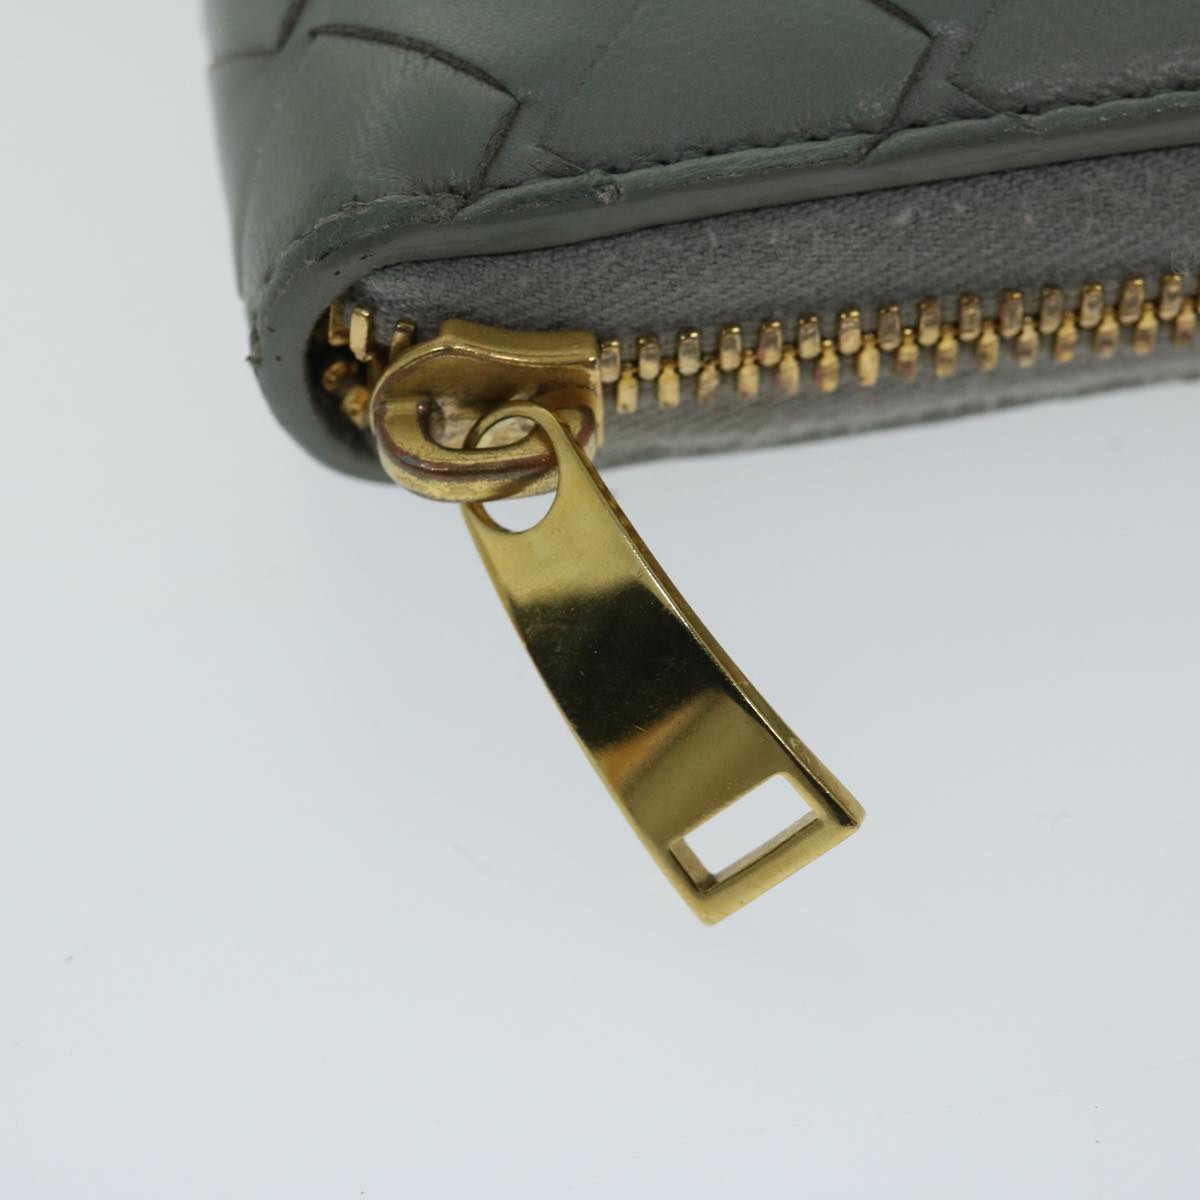 BOTTEGA VENETA MAXI INTRECCIATO Long Wallet Leather Gray Auth bs12901